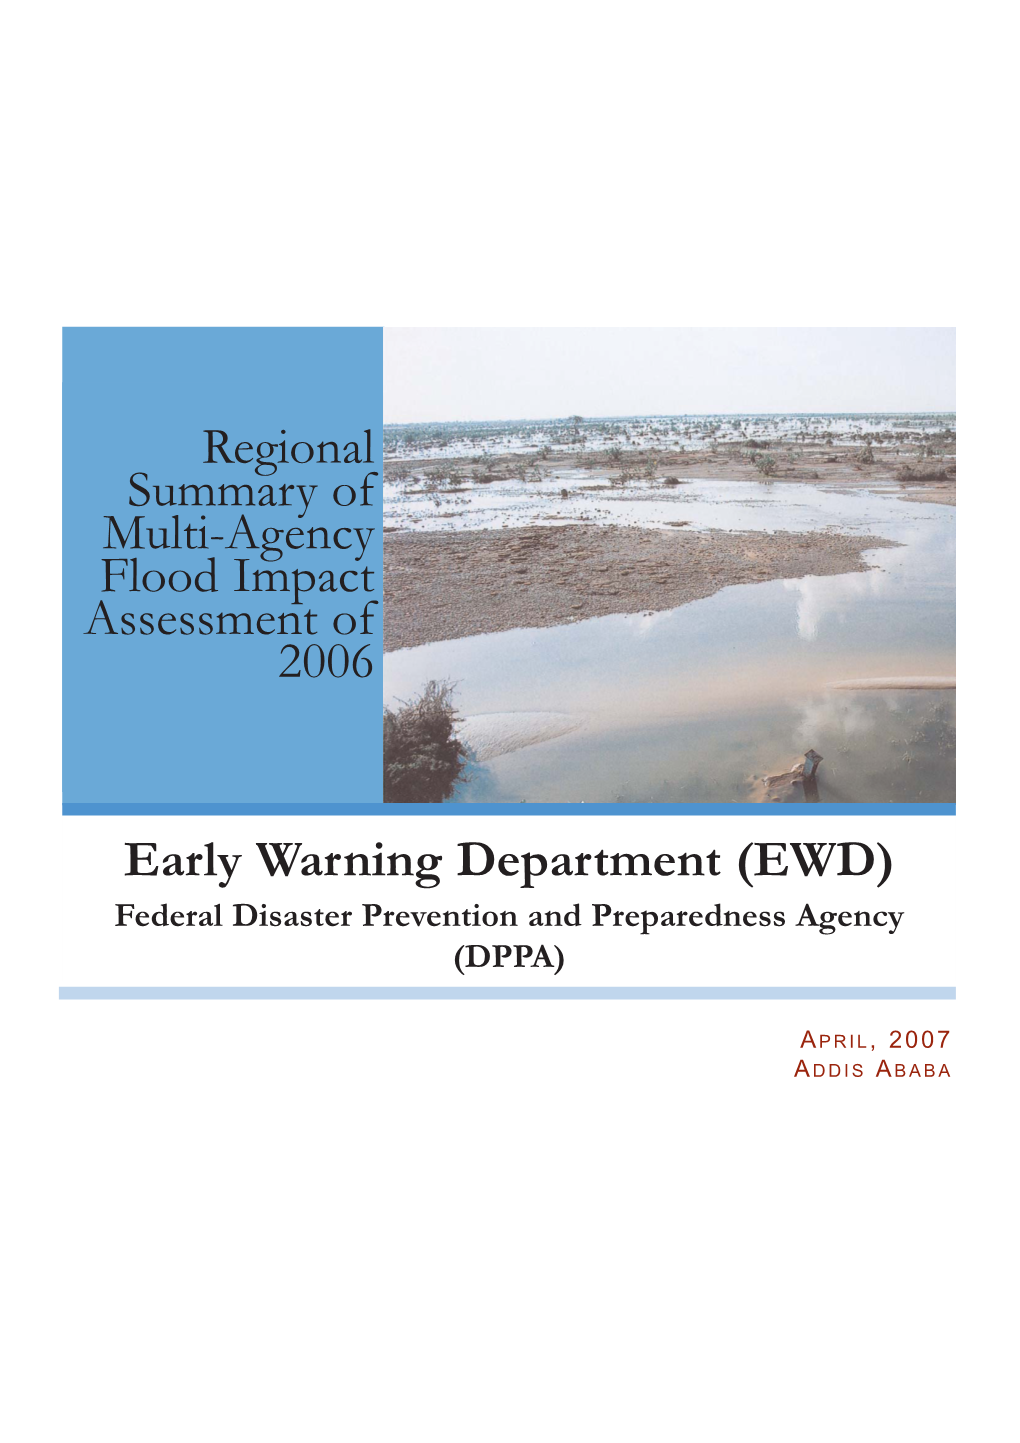 Early Warning Department (EWD) Regional Summary of Multi-Agency